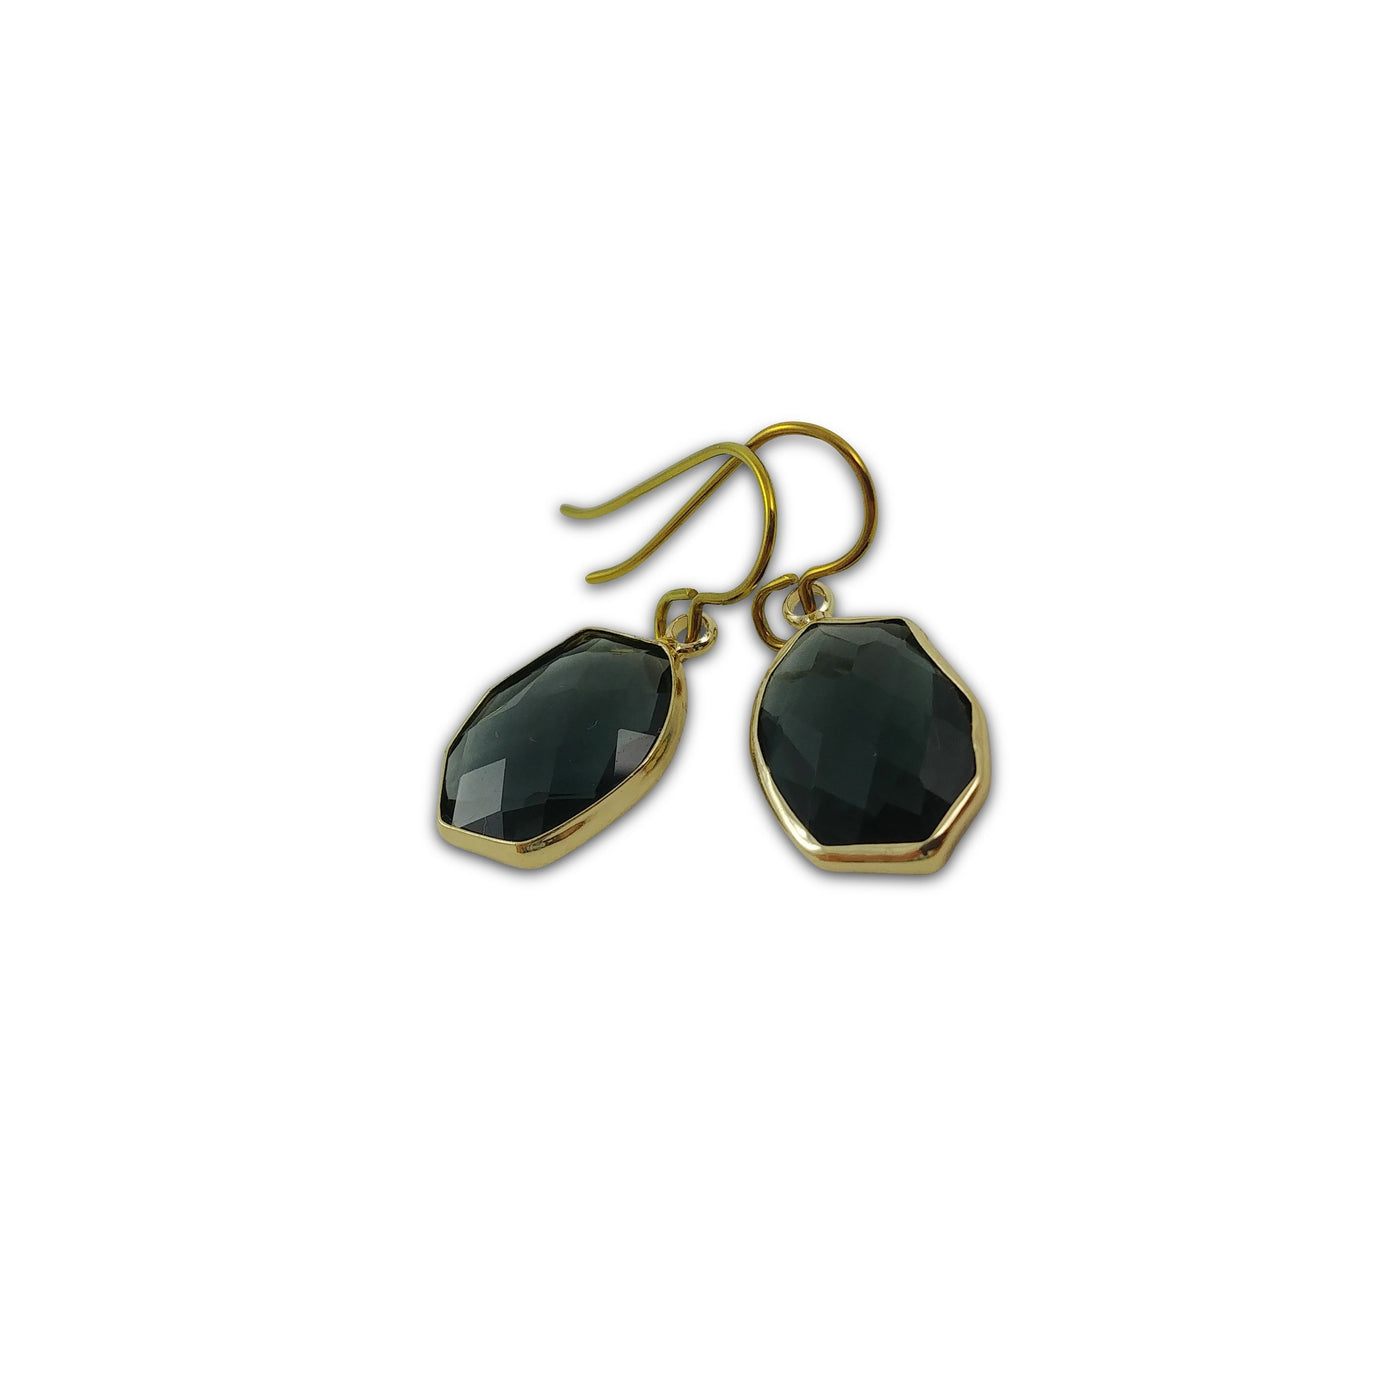 Black crystal dangle earrings, Gold wrapped crystal earrings, Faceted oval drop earrings, Nickel free jewelry